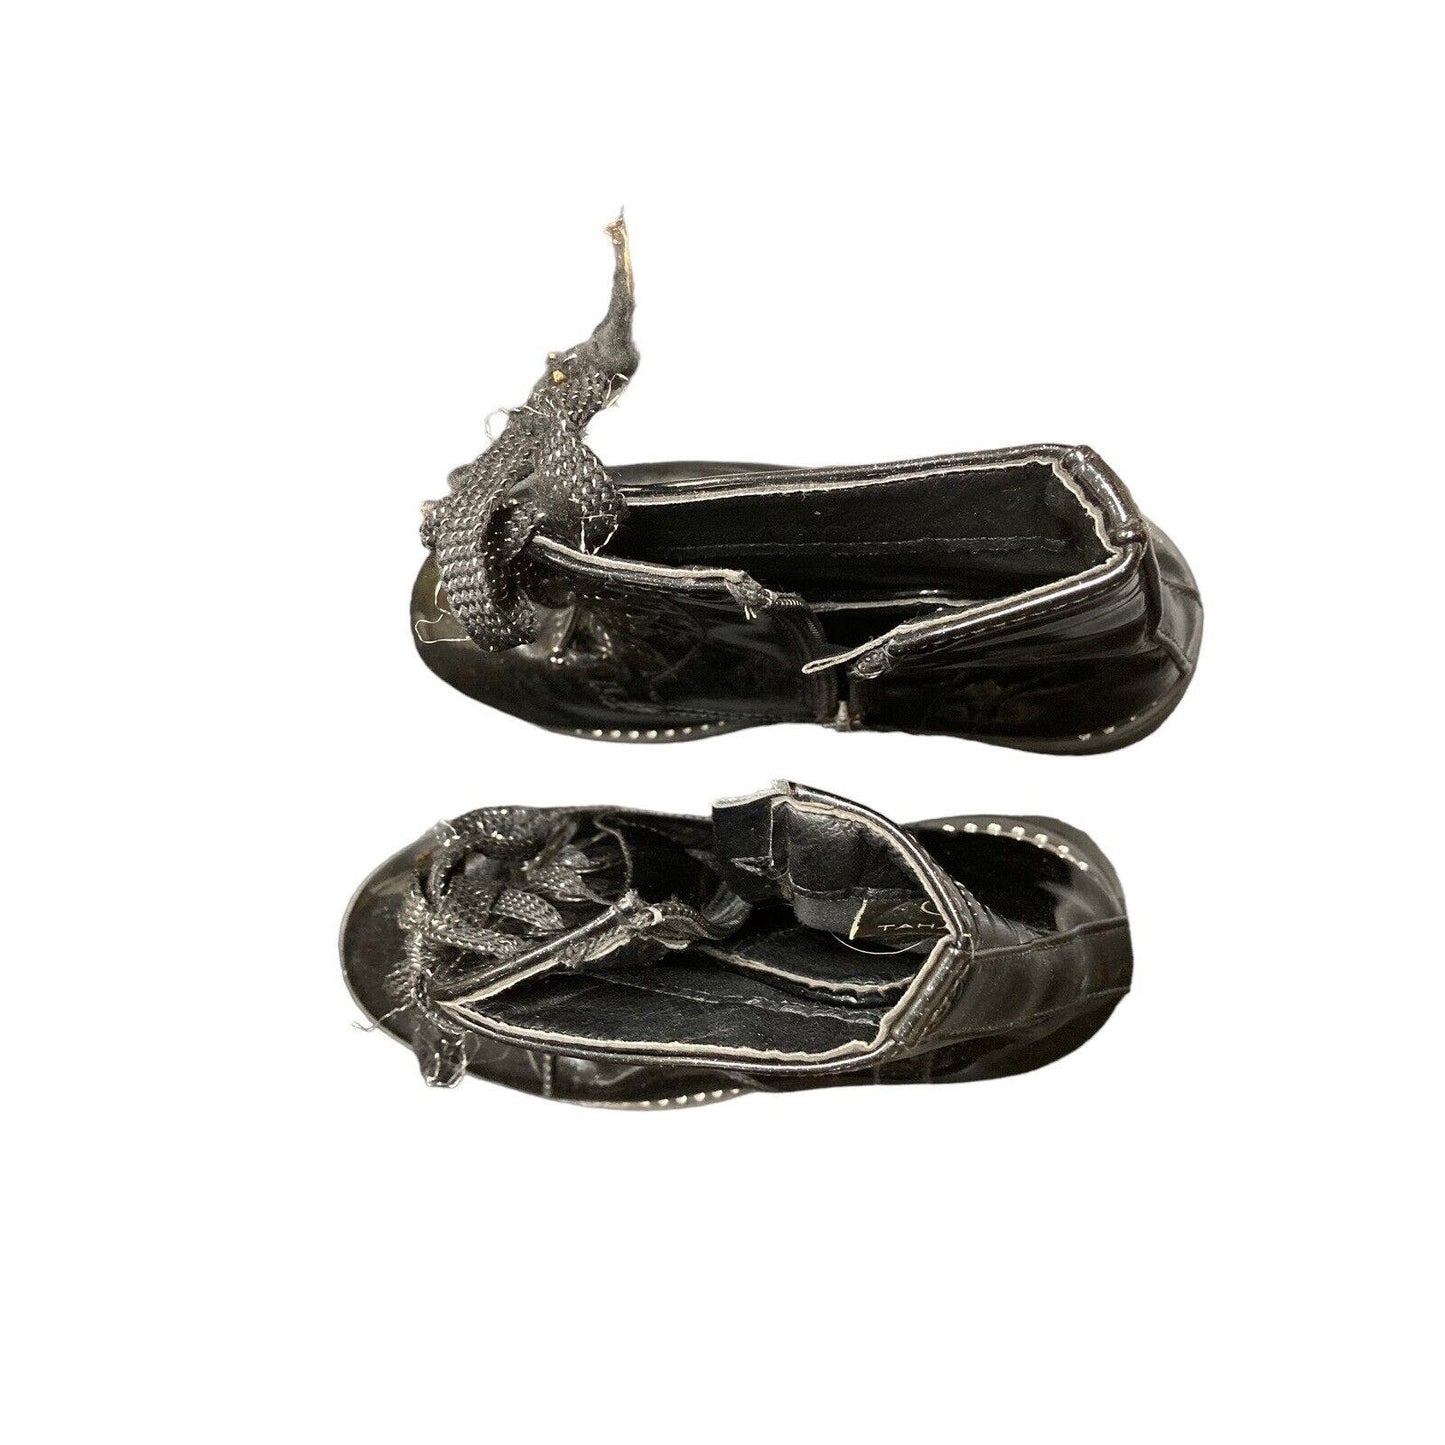 Tahari Girls Black Sparkle Side Zip Merlene Boots Size 1